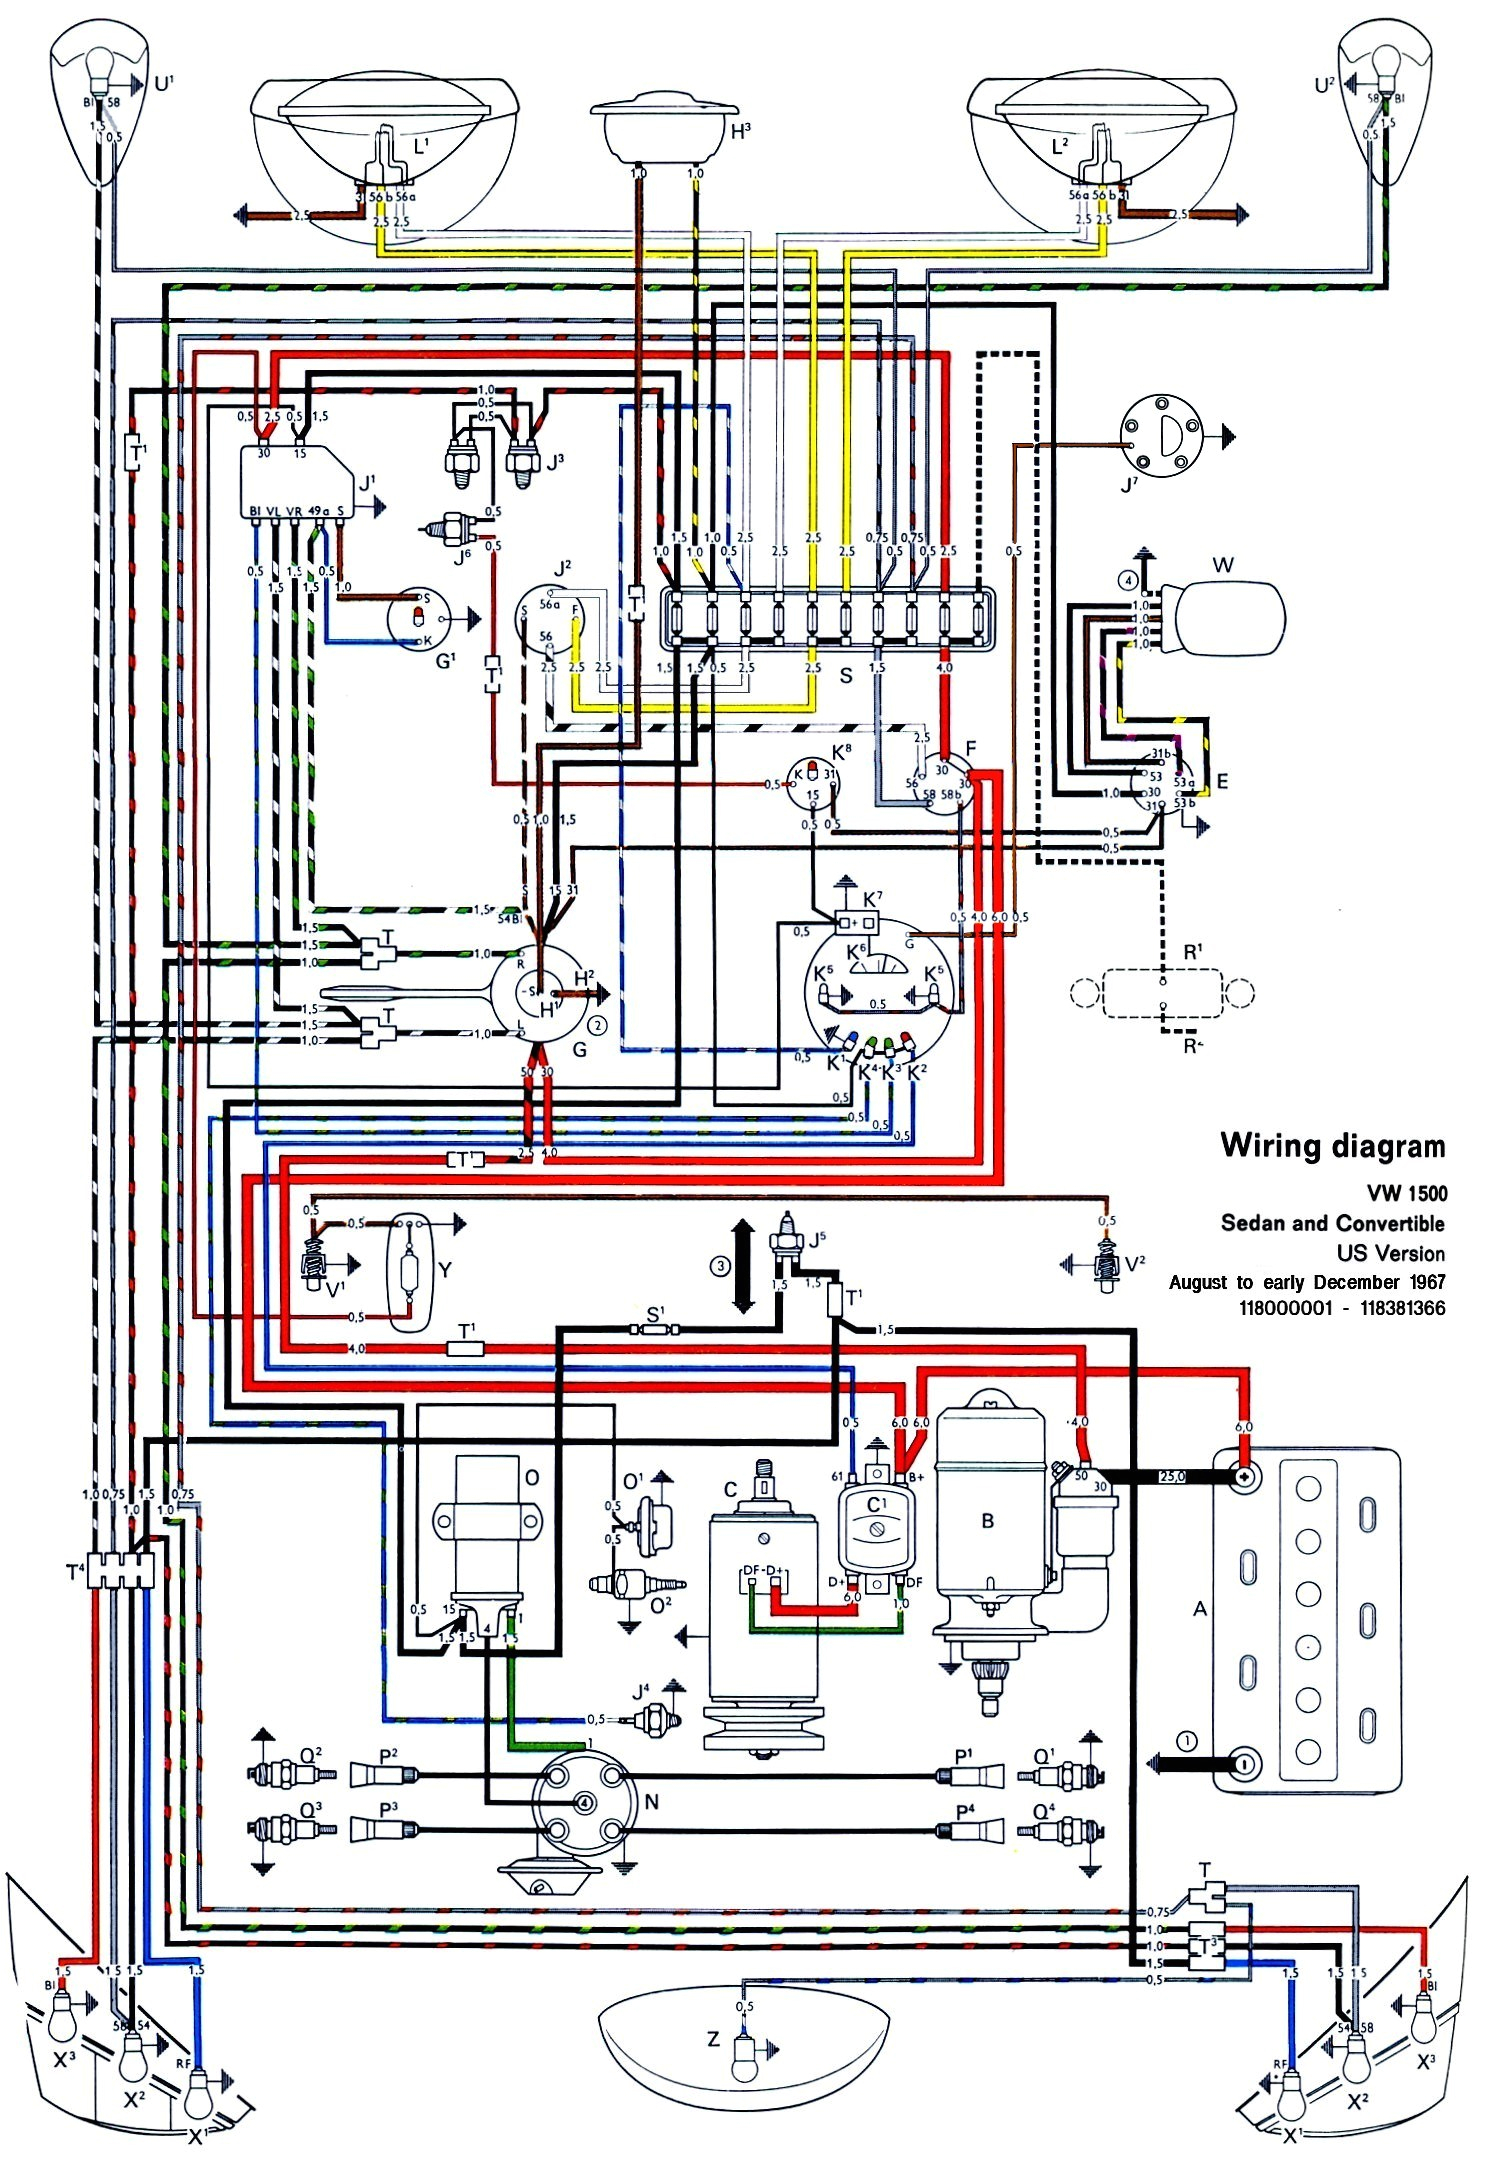 wire diagram vw beetle wiring diagram demo wiring diagram for 1973 vw beetle